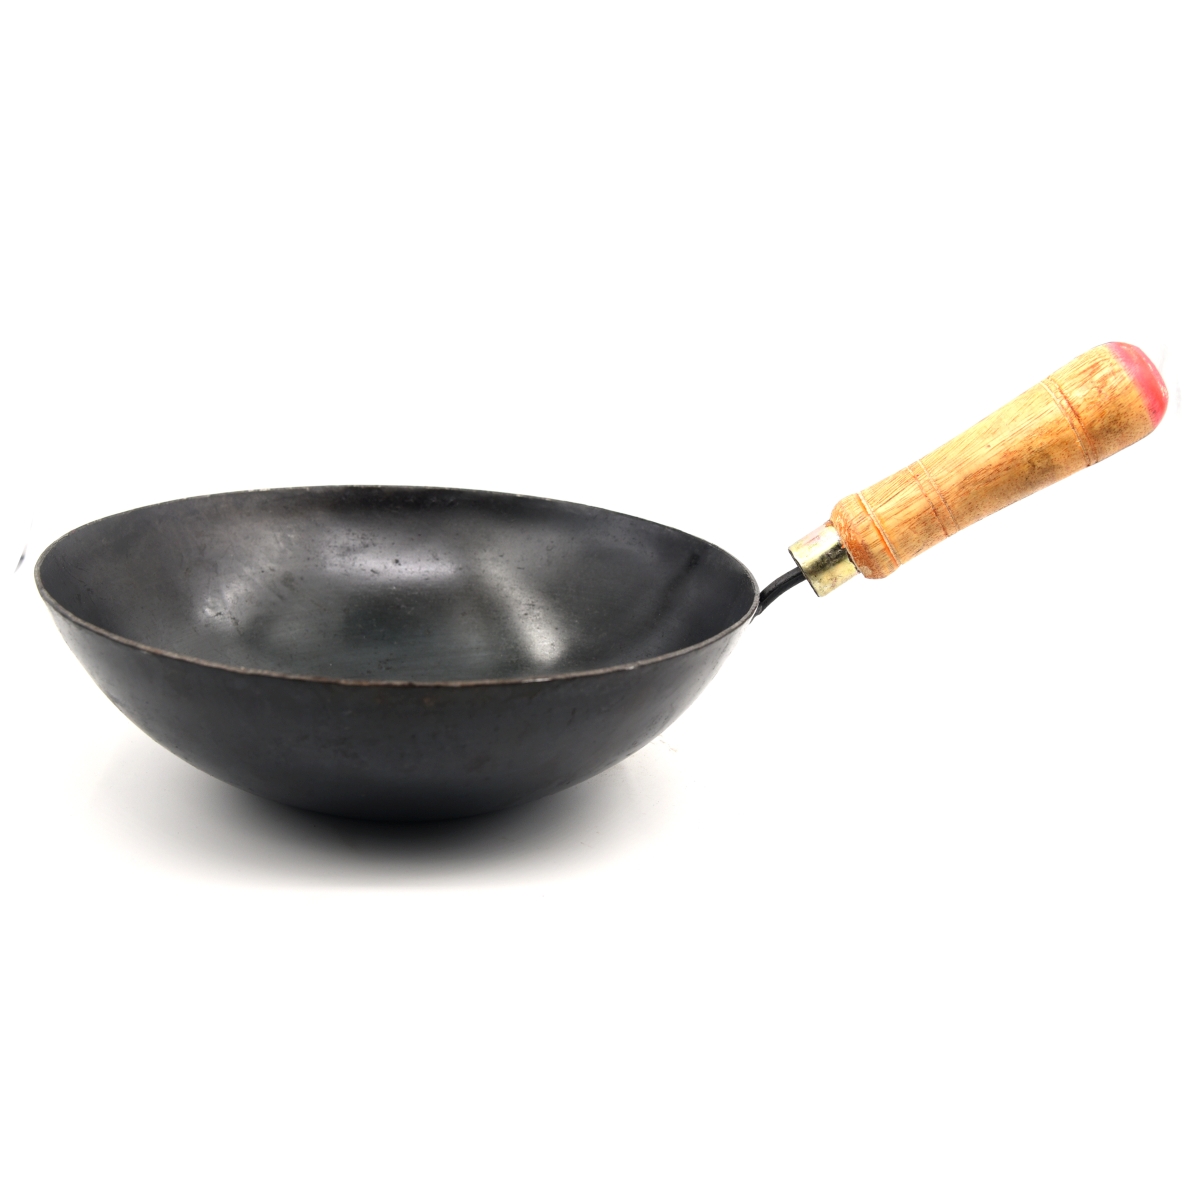 Seasoned Iron Flat Bottom Wok with Wooden Handle - Essential